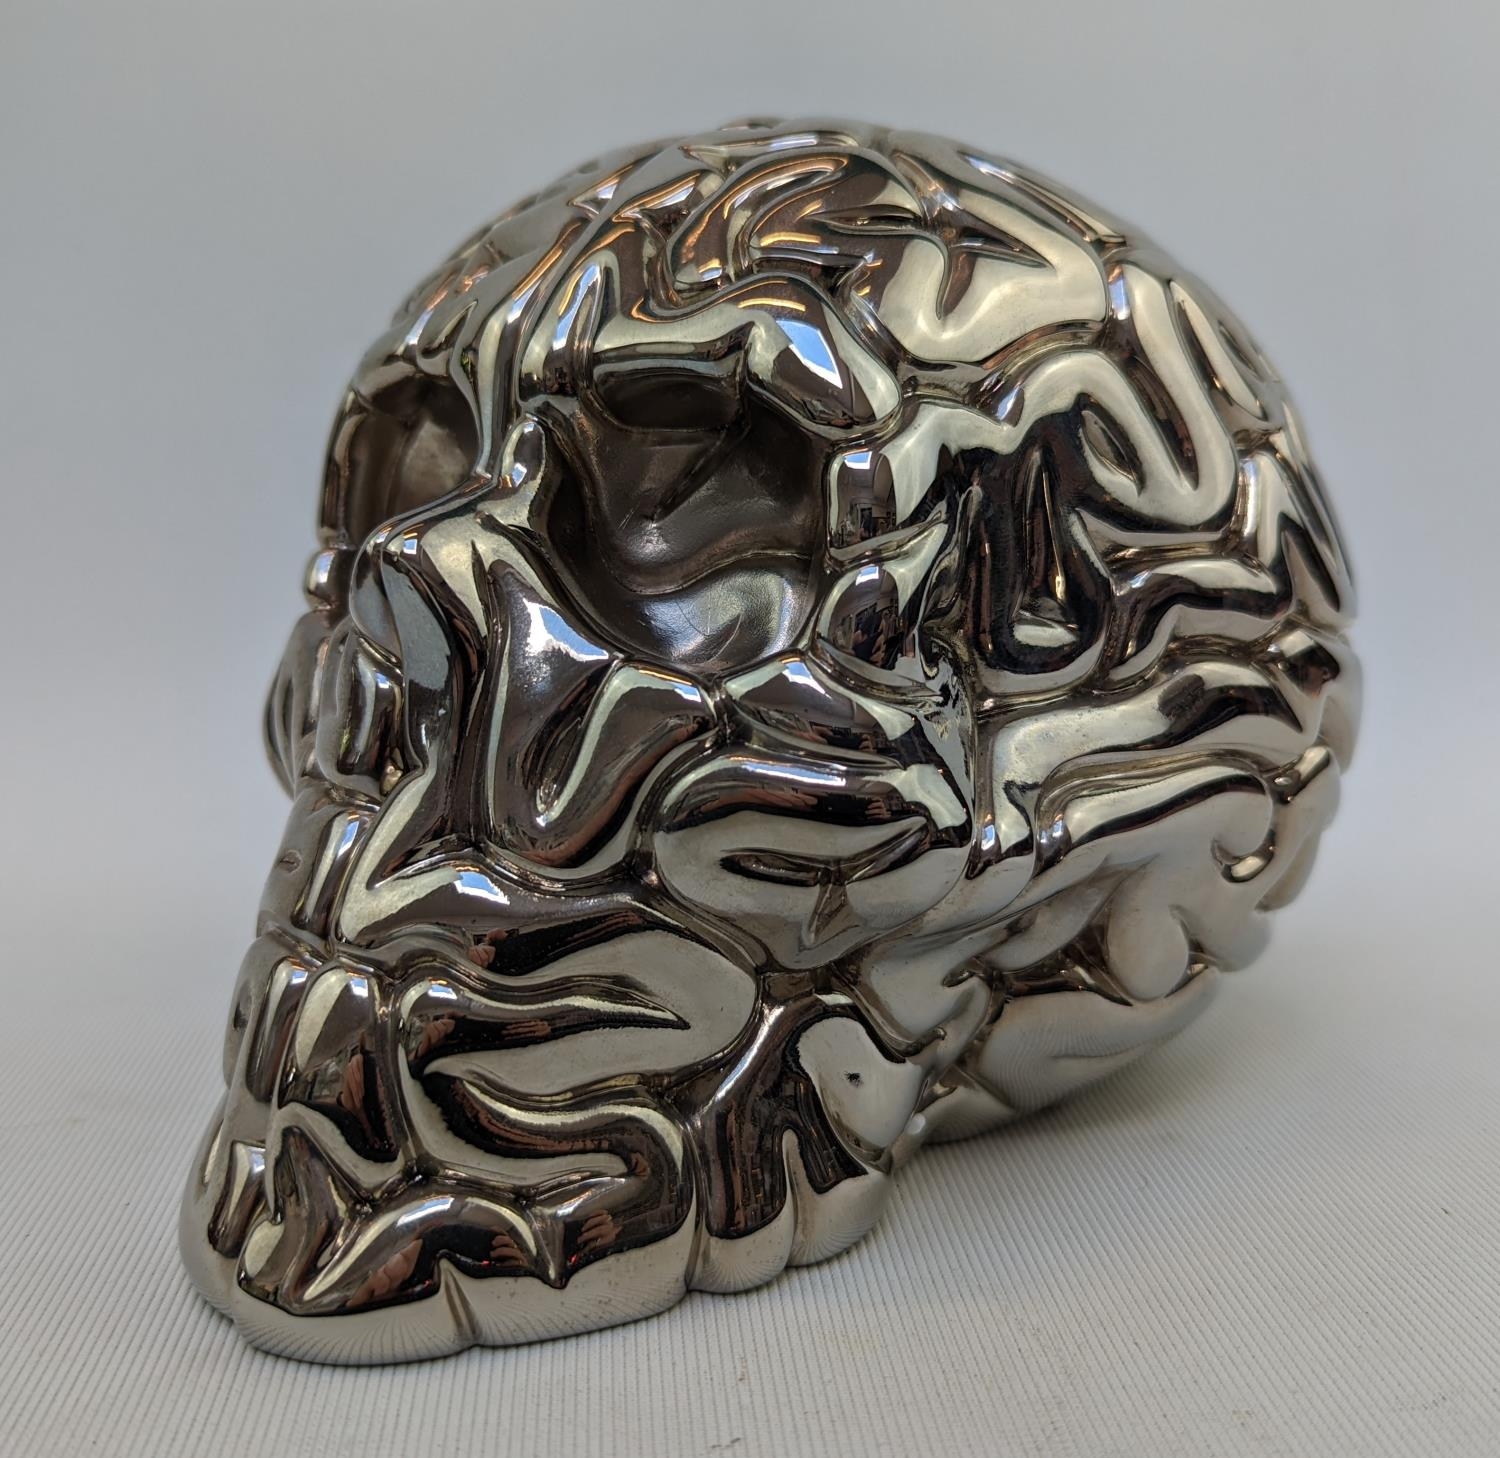 Emilio Garcia (b1981) Skull Brain Chrome segmented sculpture. Ltd edition 11/20 with certificate